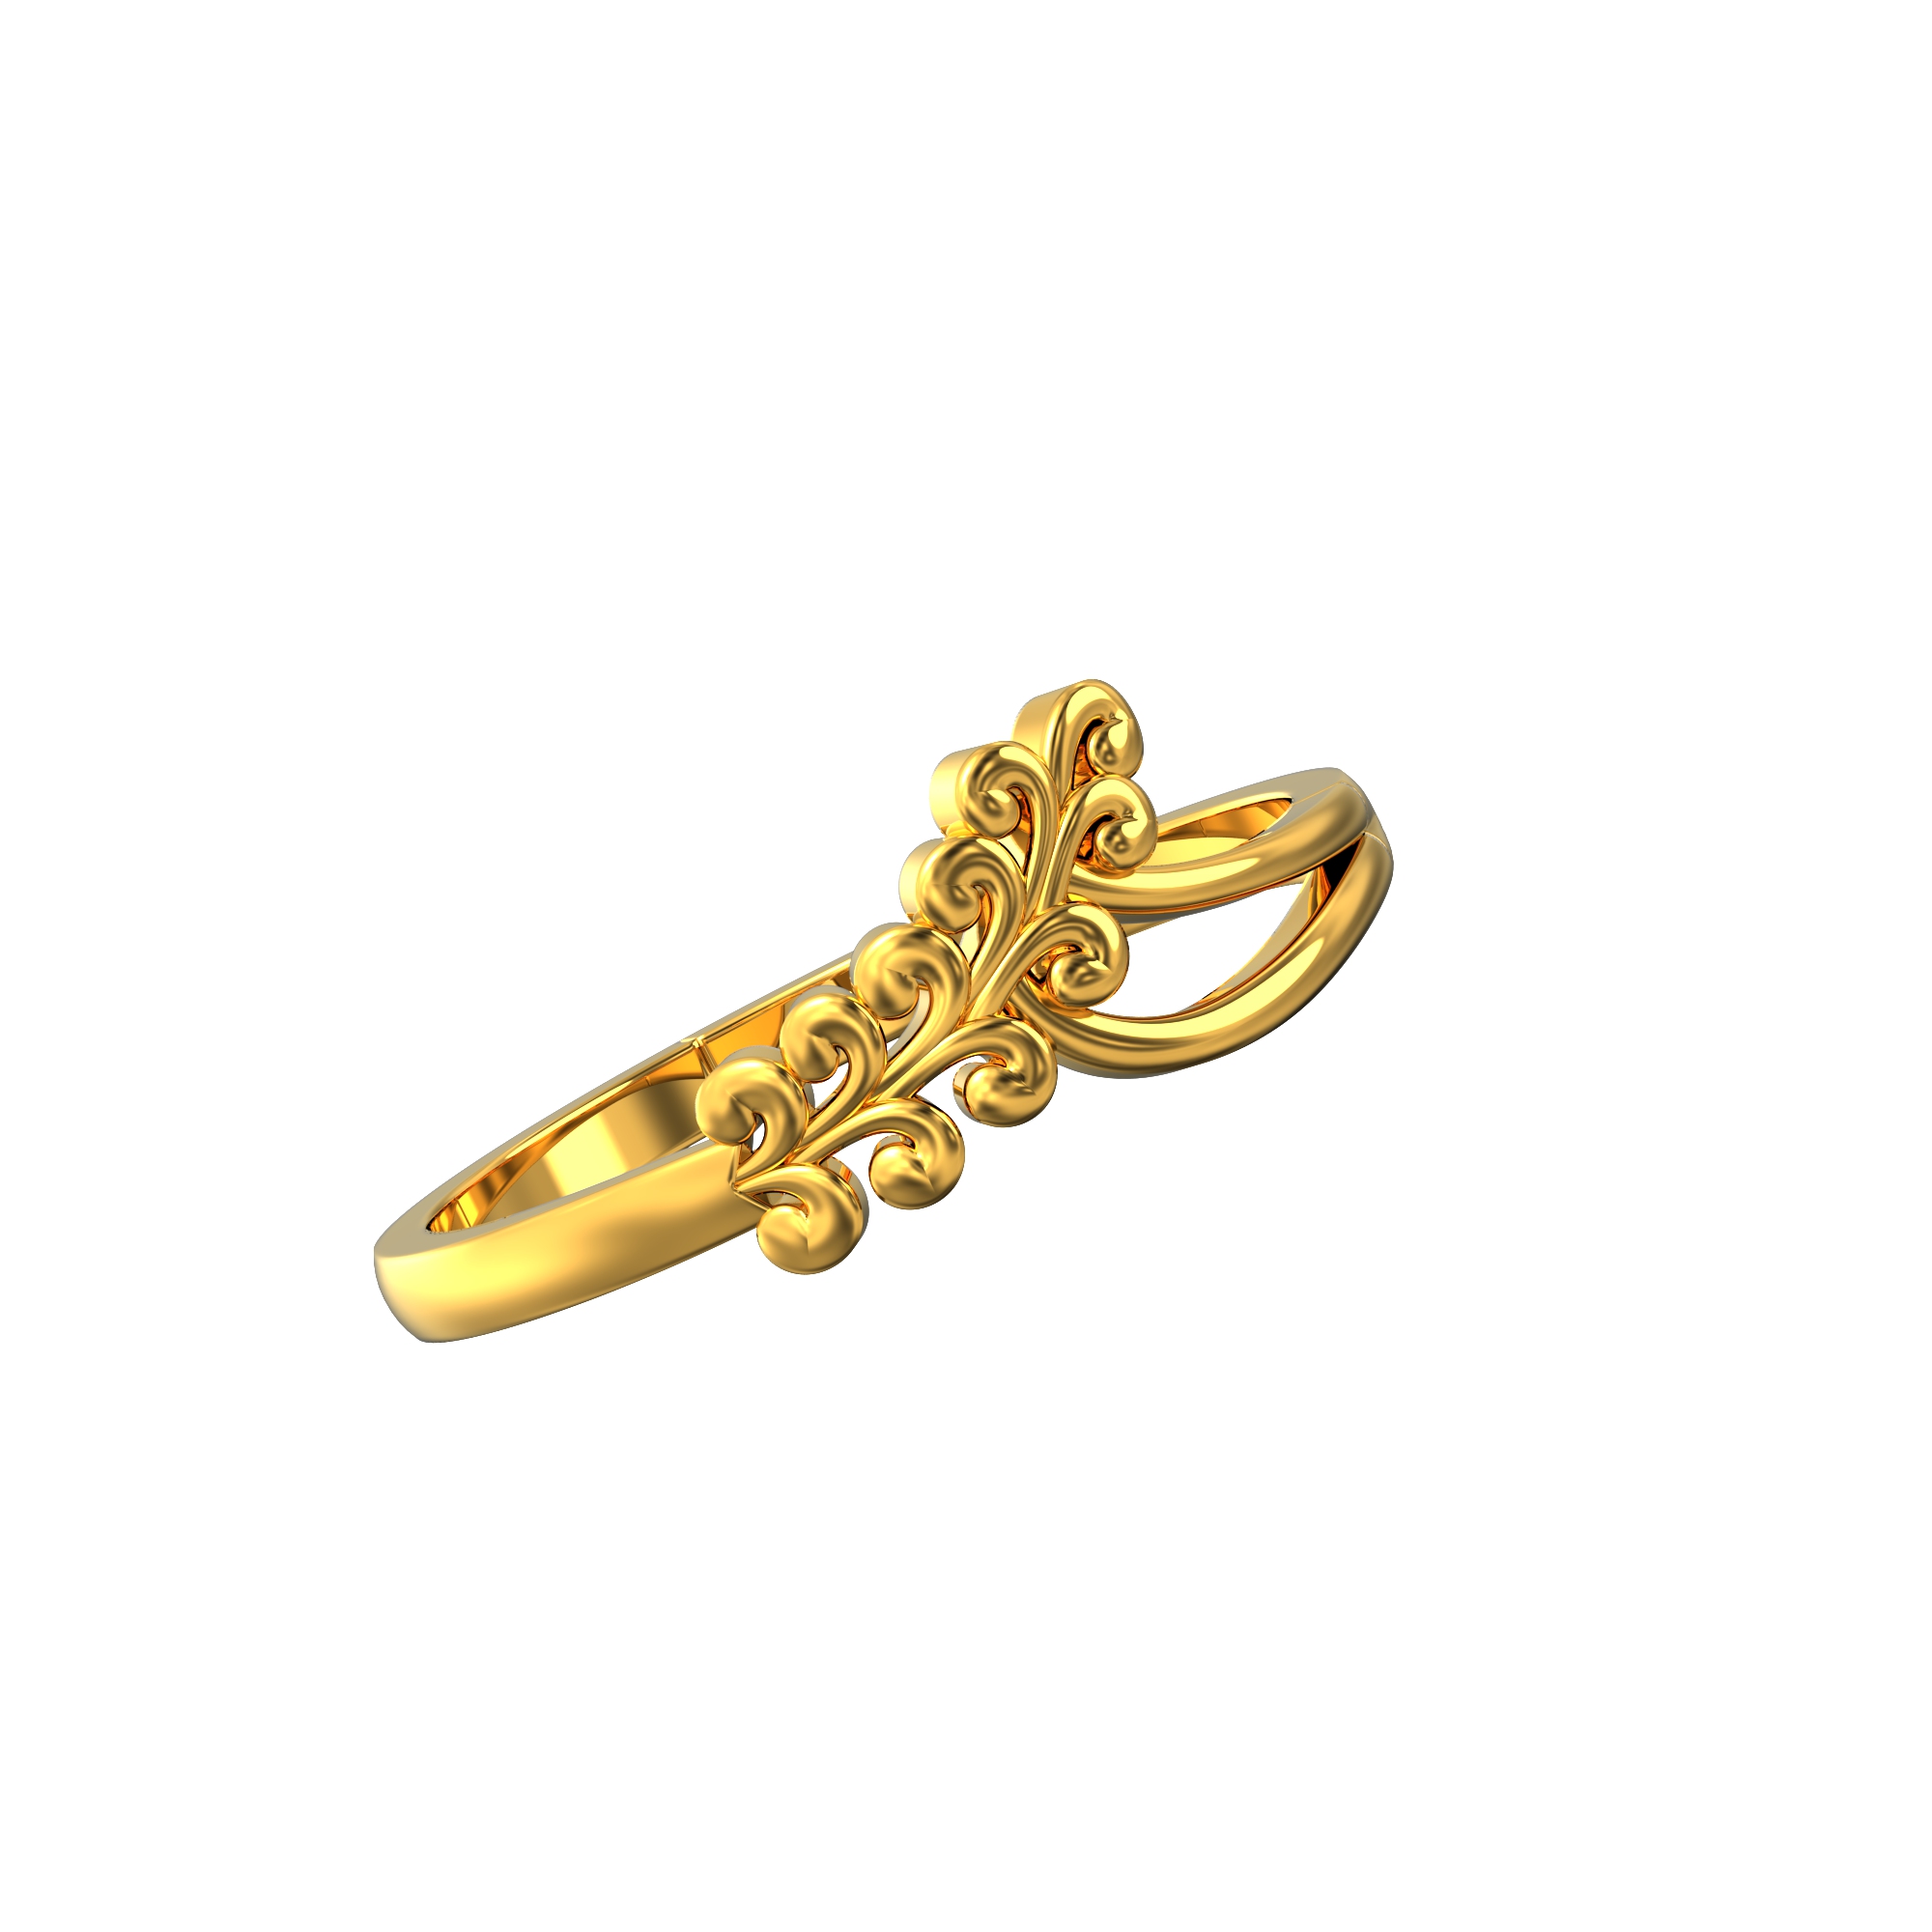 22k Gold Traditional Ladies Ring - Rilg22798 - 22k Gold Traditional Ladies  Ring. Ring is designed in wide design. Detailed filigree work in combina